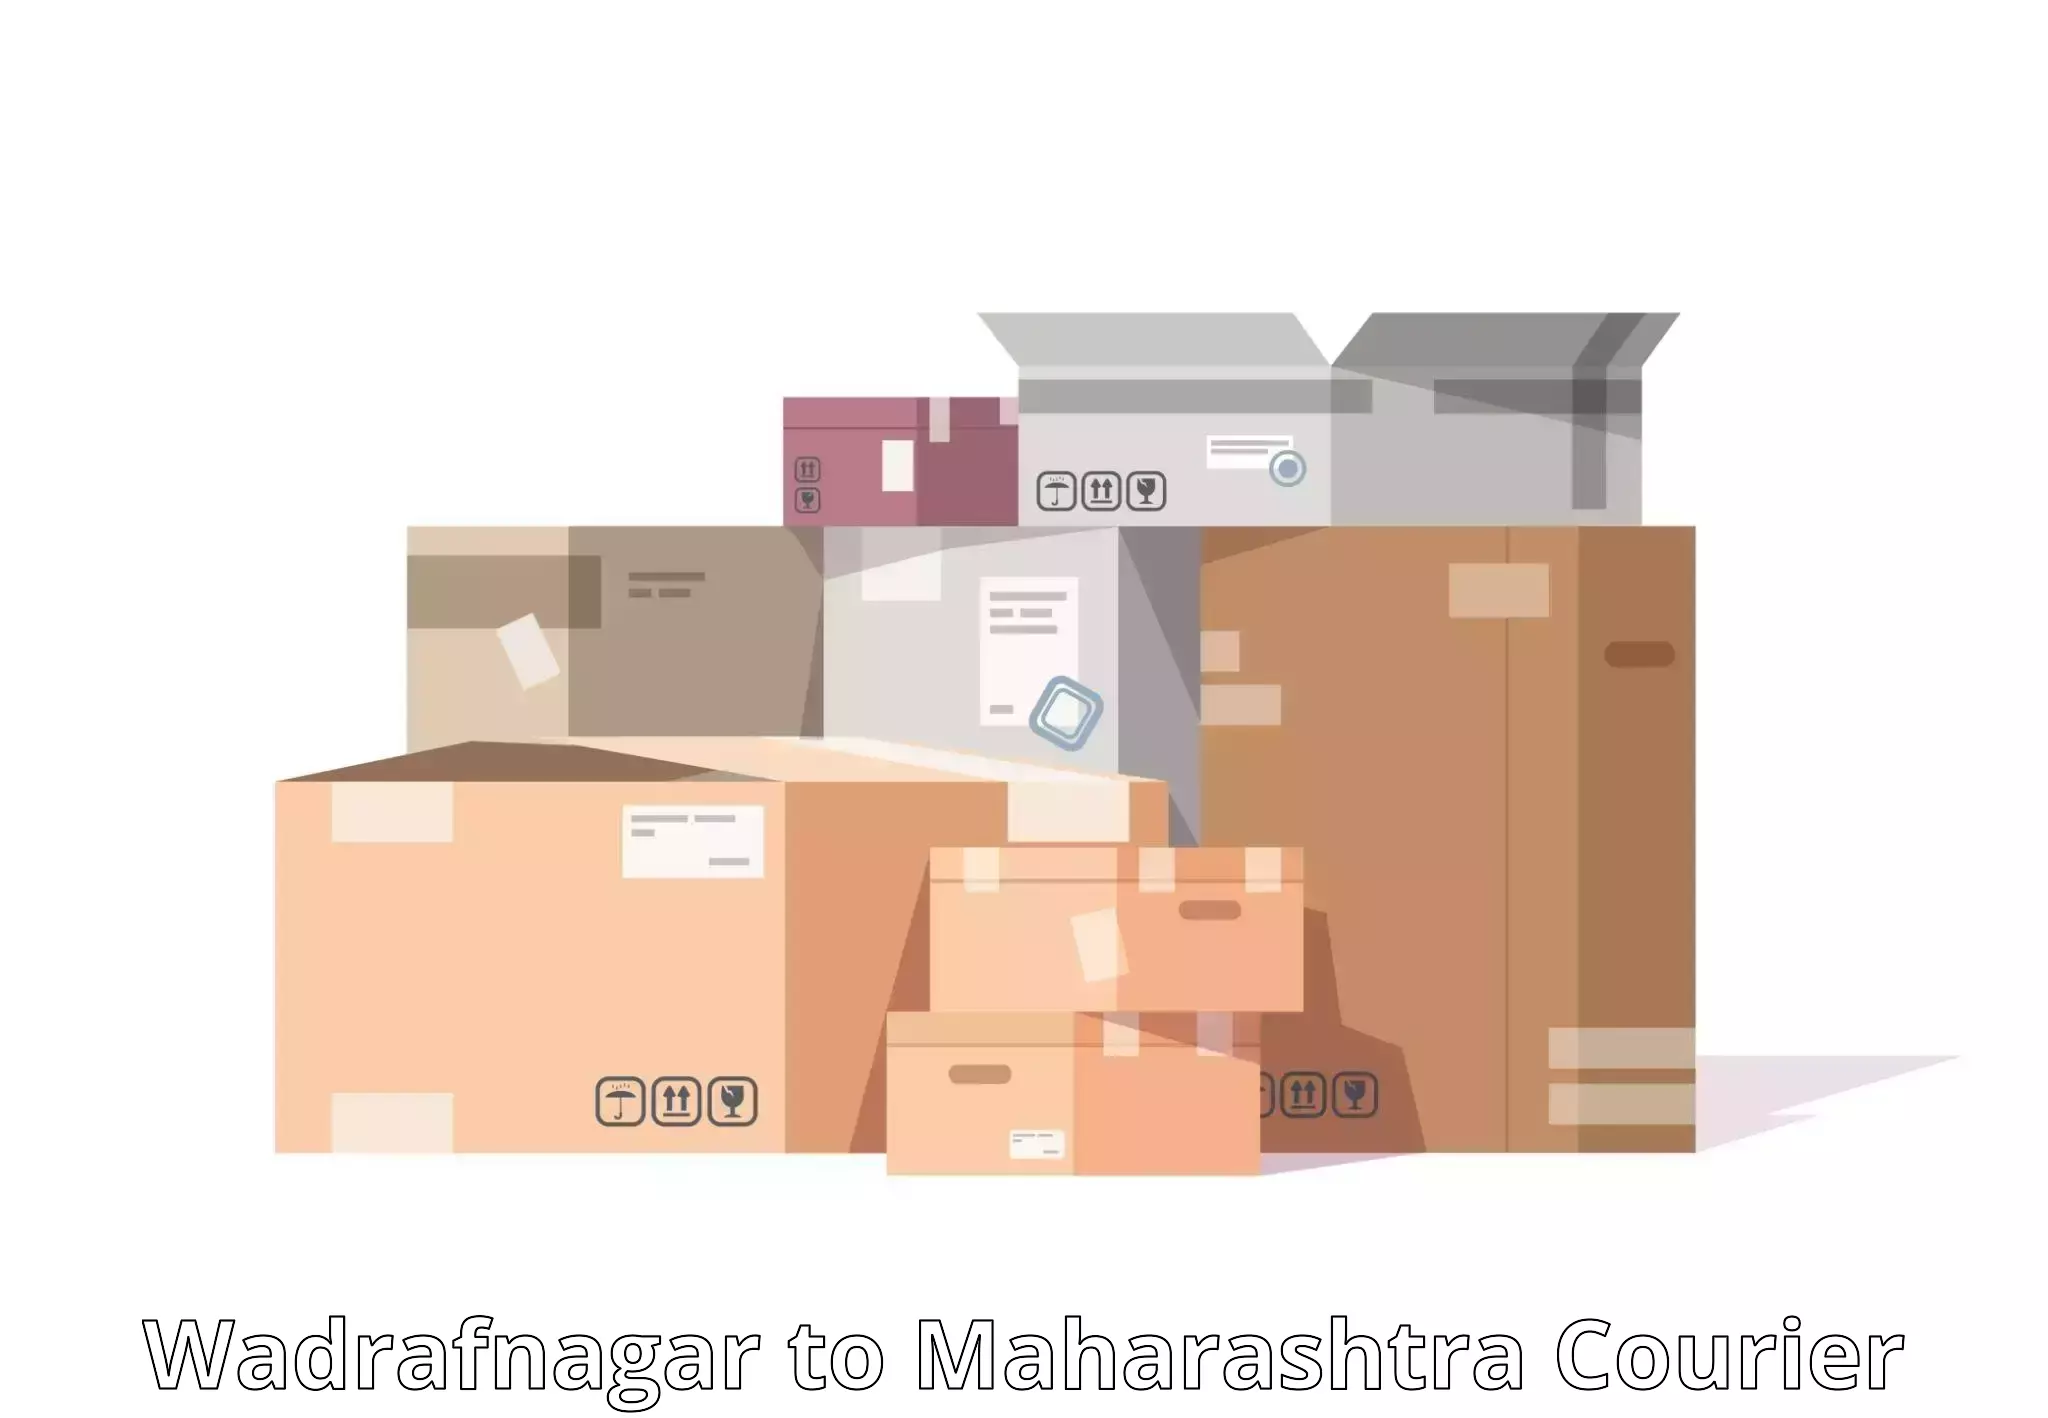 Logistics service provider Wadrafnagar to Roha